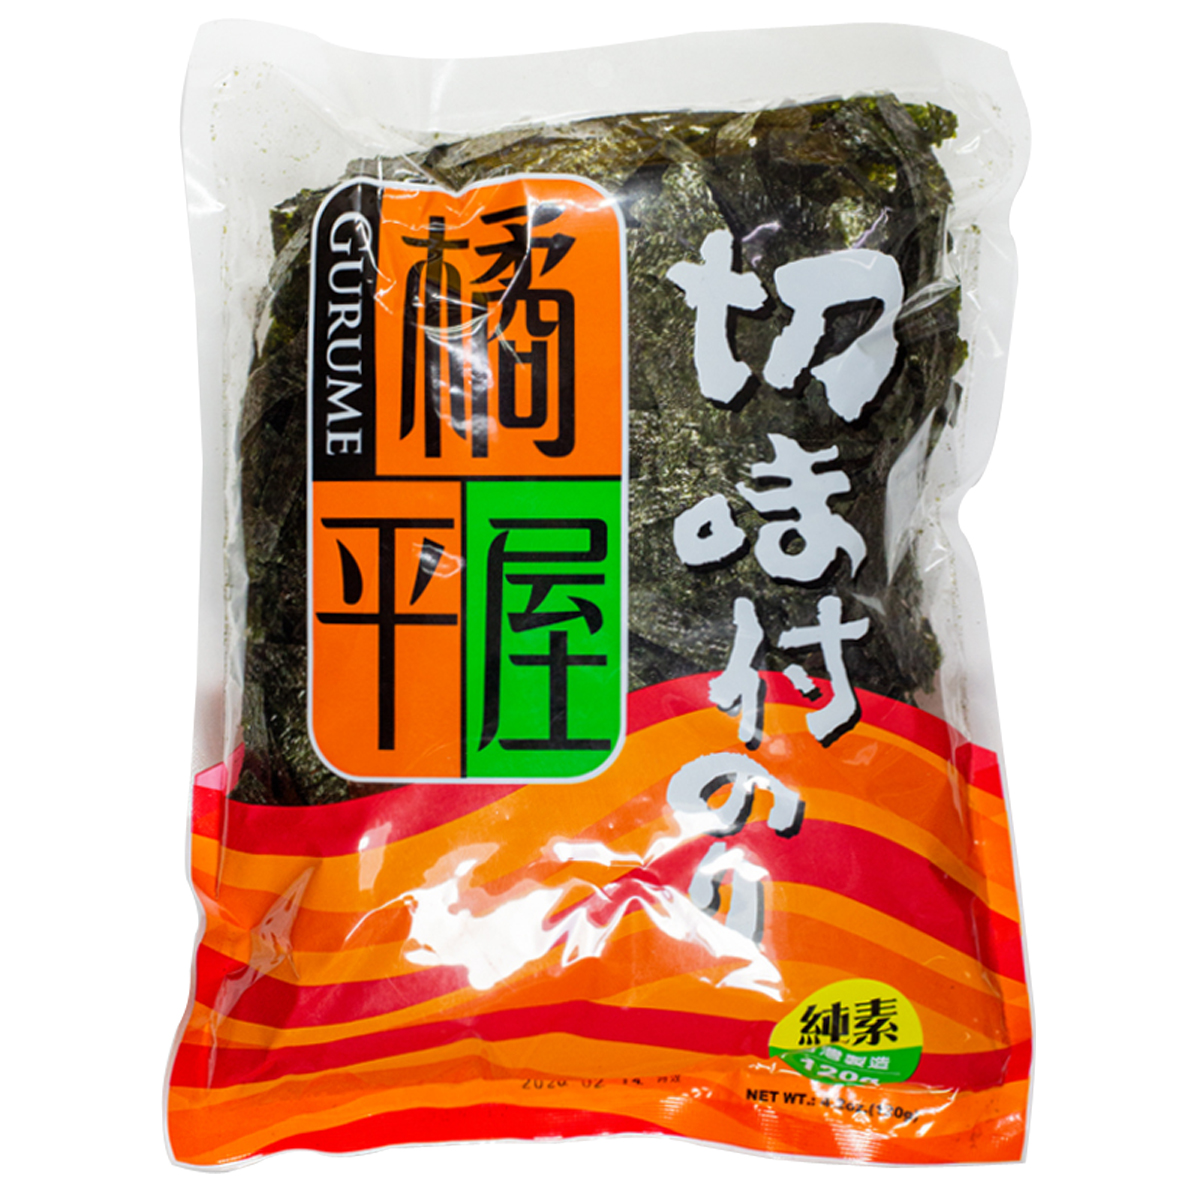 Image Seaweed Flakes 三味屋 / 橘平屋 - 味付海苔细片 120grams